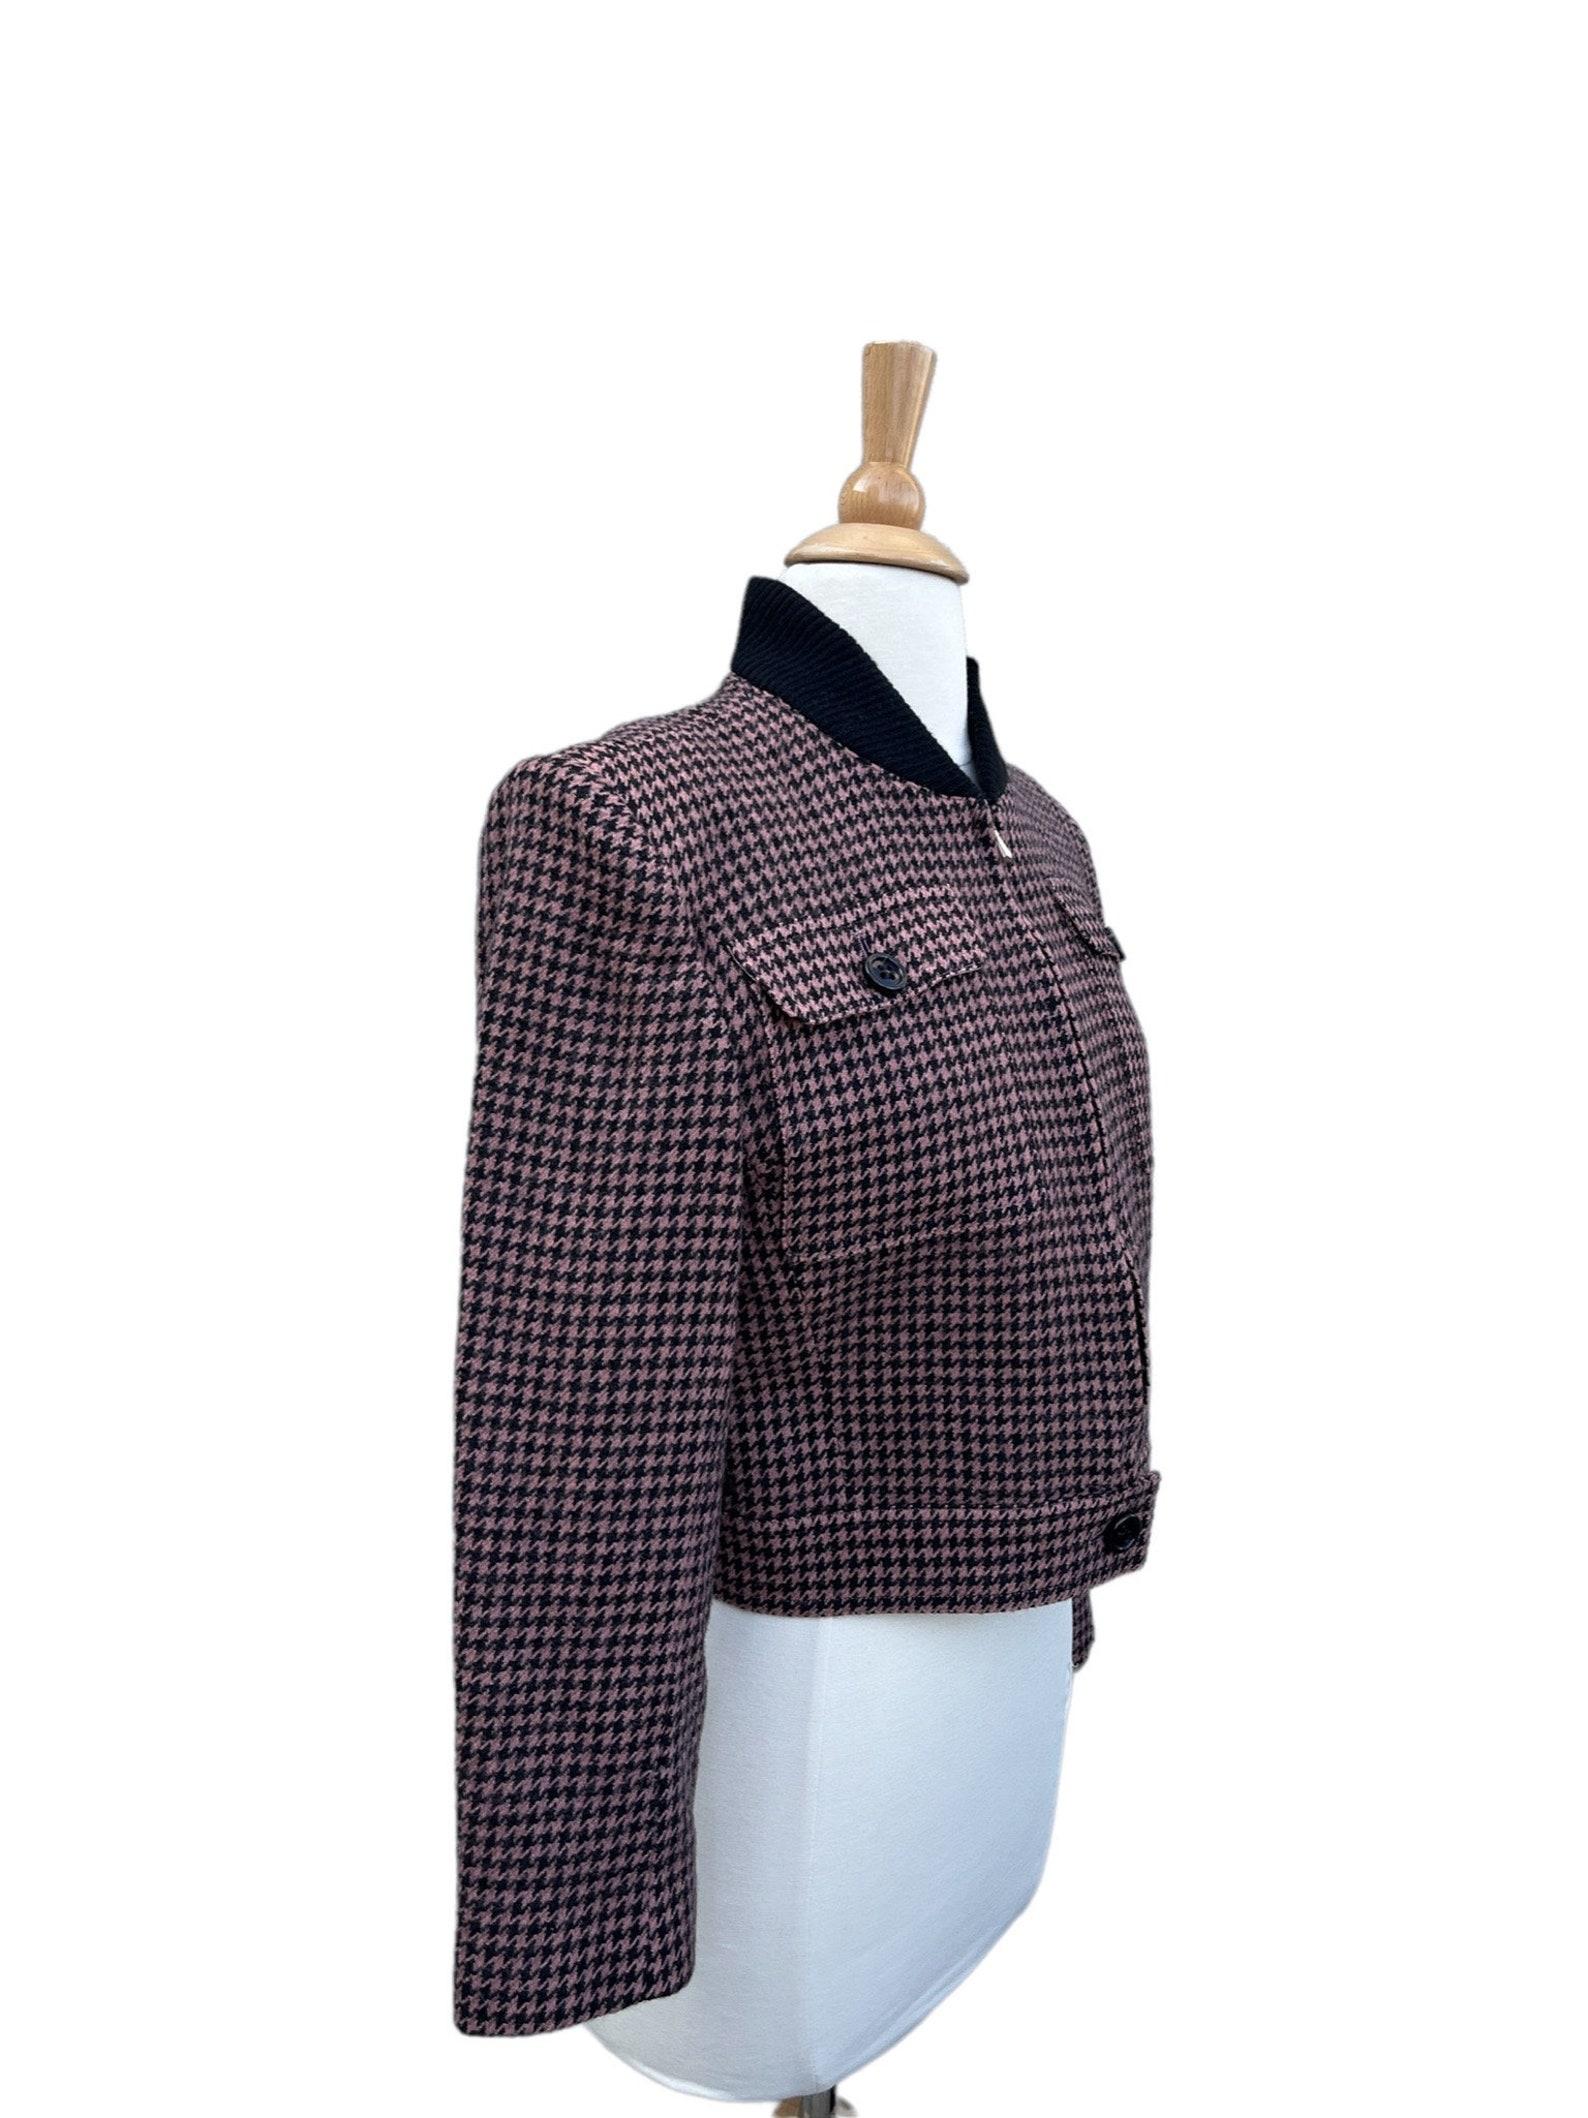 Women's Guy Laroche houndstooth jacket For Sale